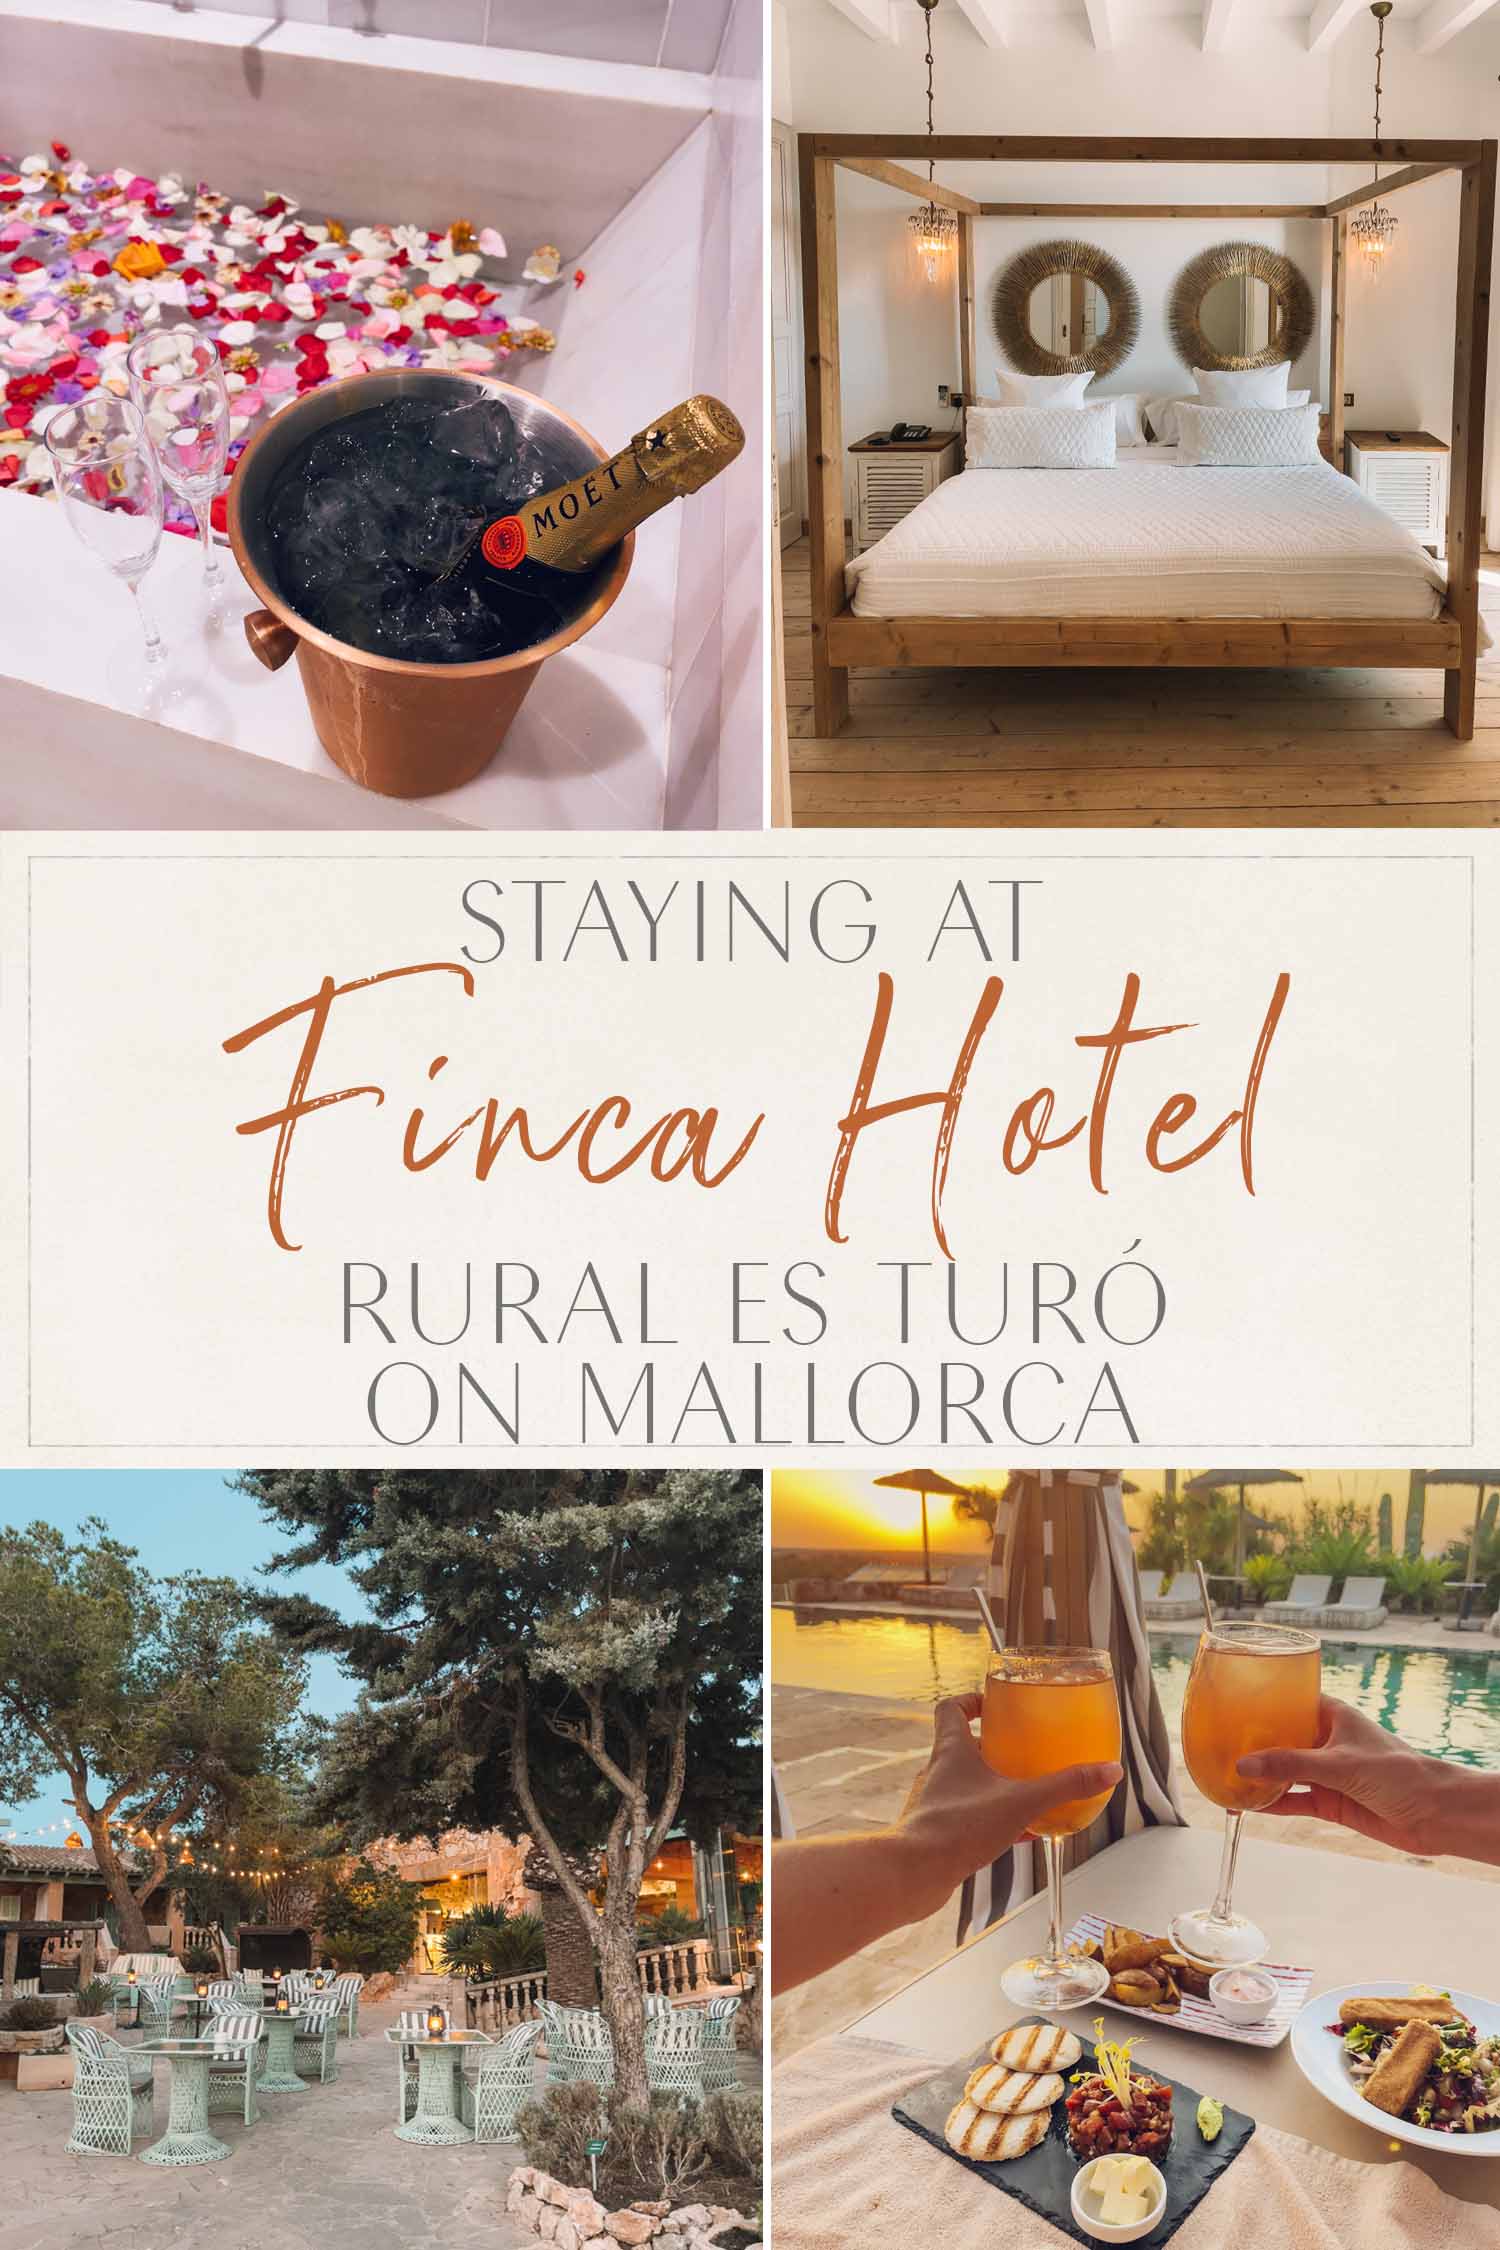 Finca Hotel Rural Es Turo Mallorca